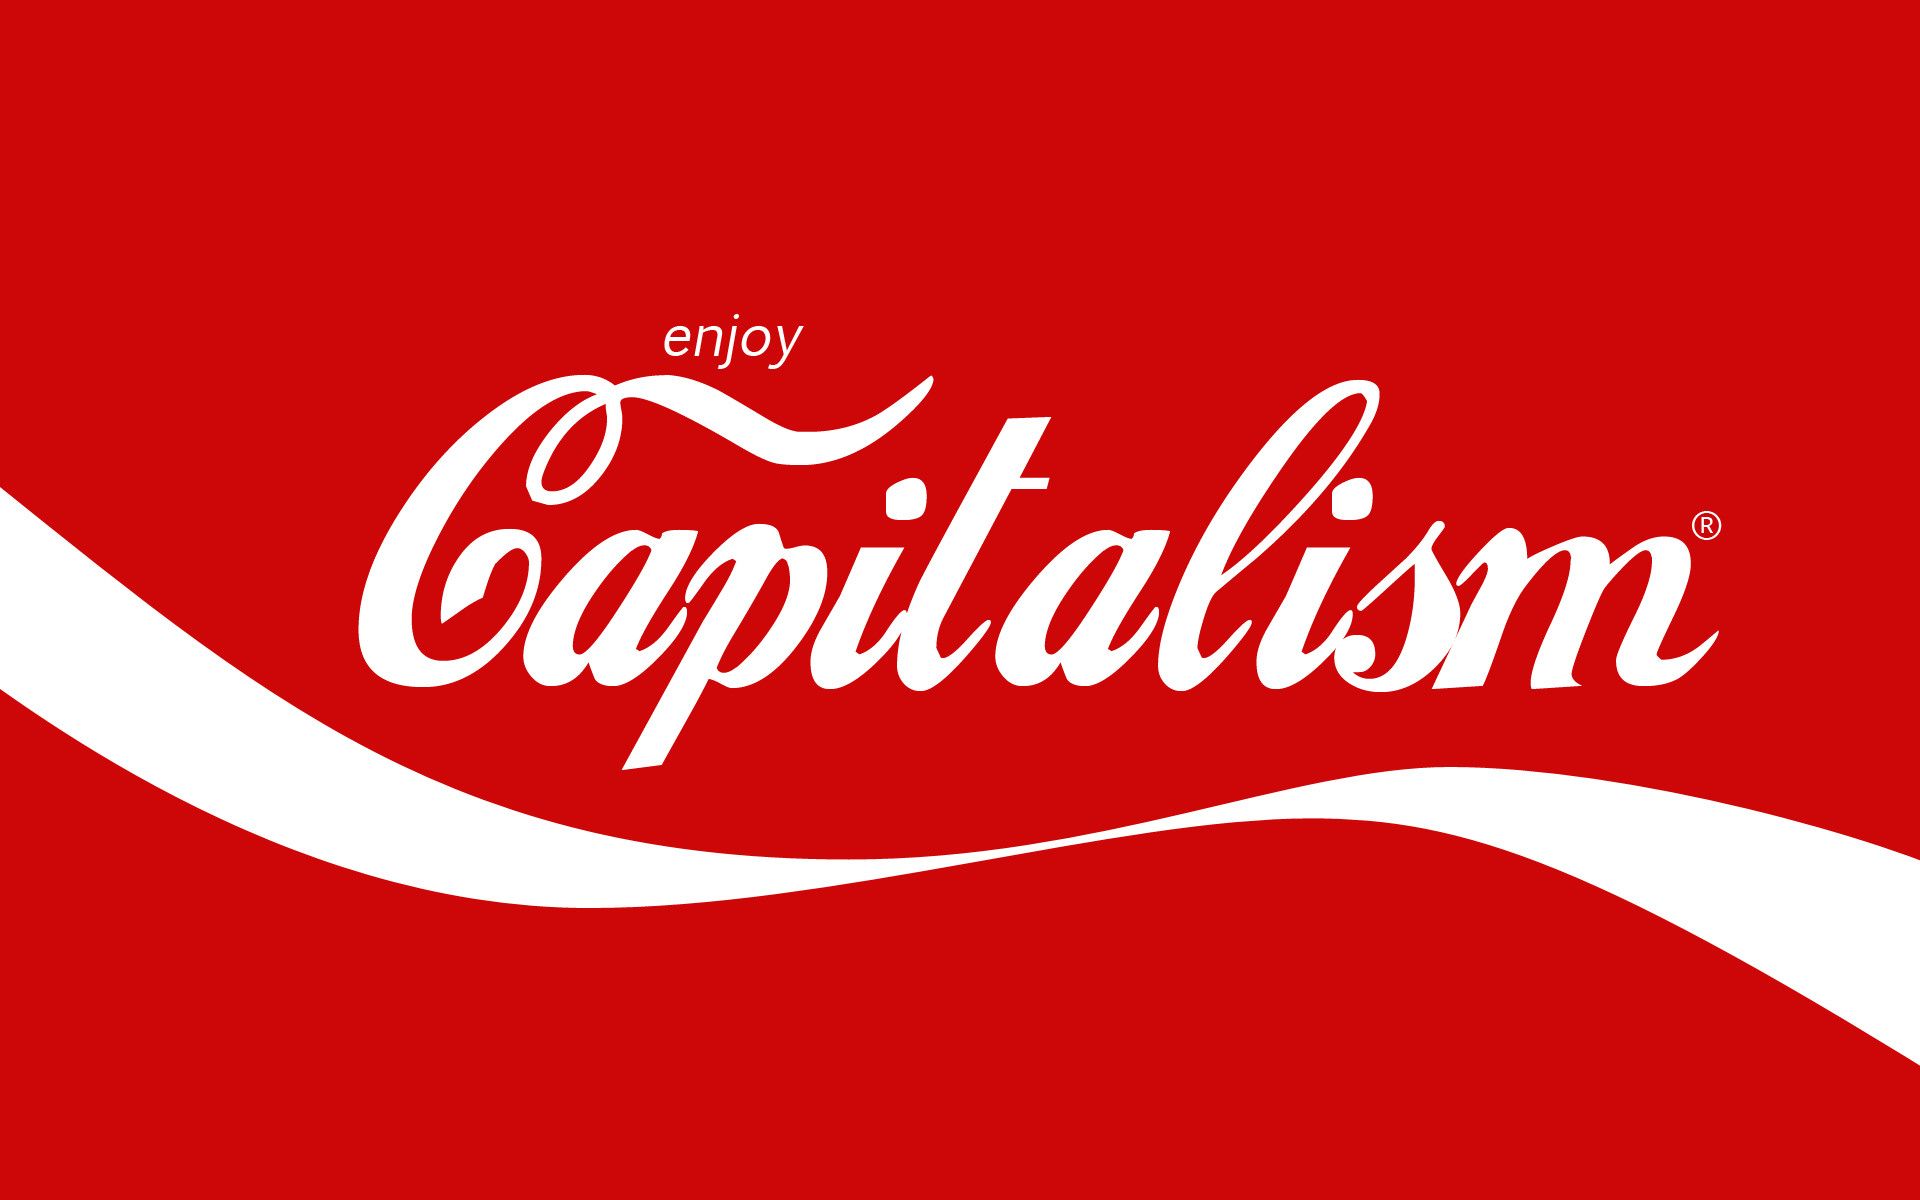 Enjoy Capitalism. Free Picture. Wallpaper. Capitalism, Socialism, Enjoyment